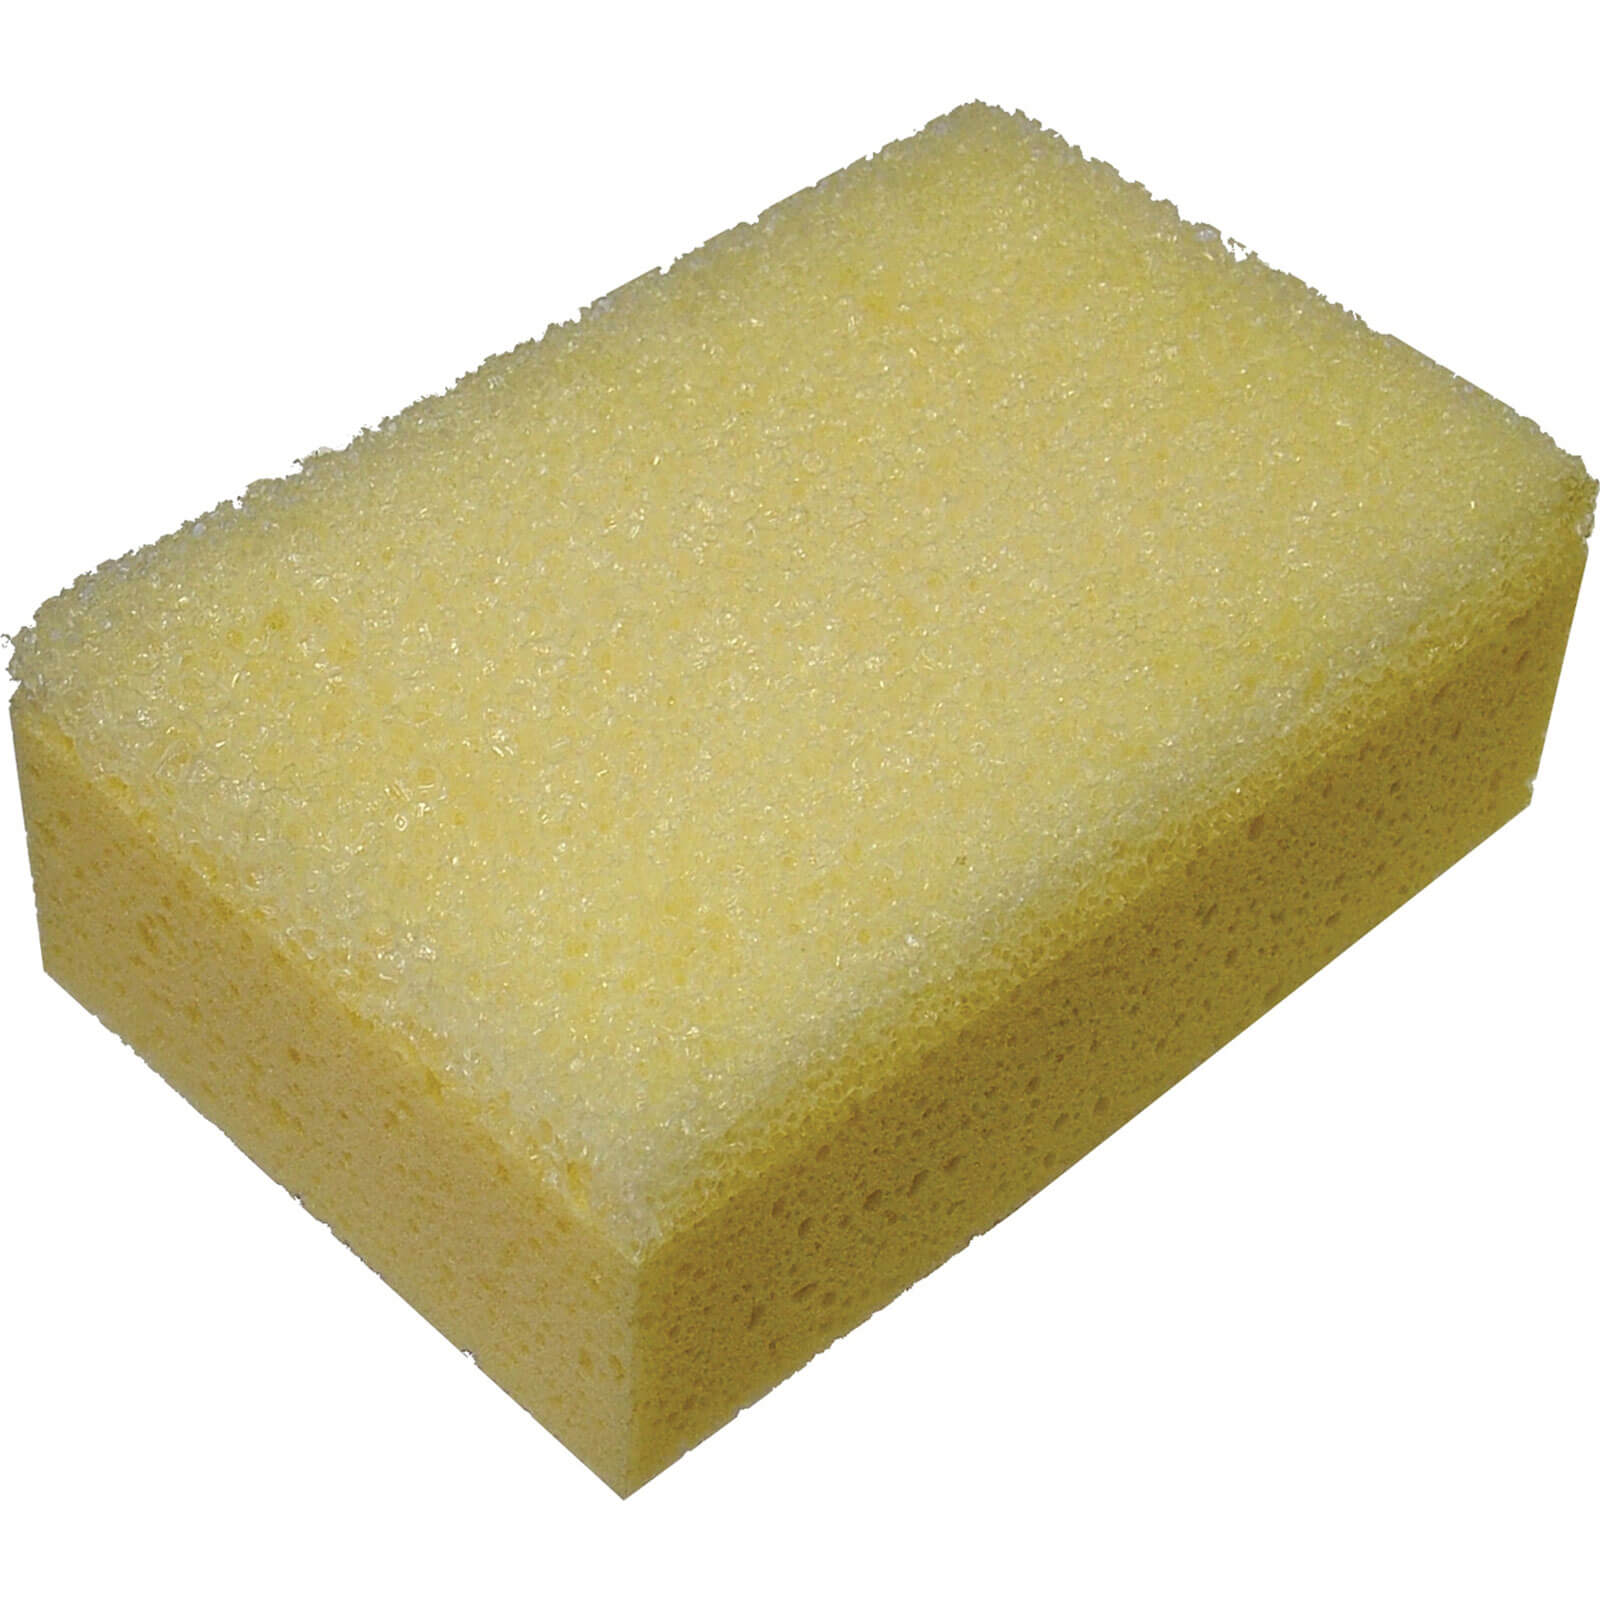 Image of Faithfull Professional Tile Grouting Sponge